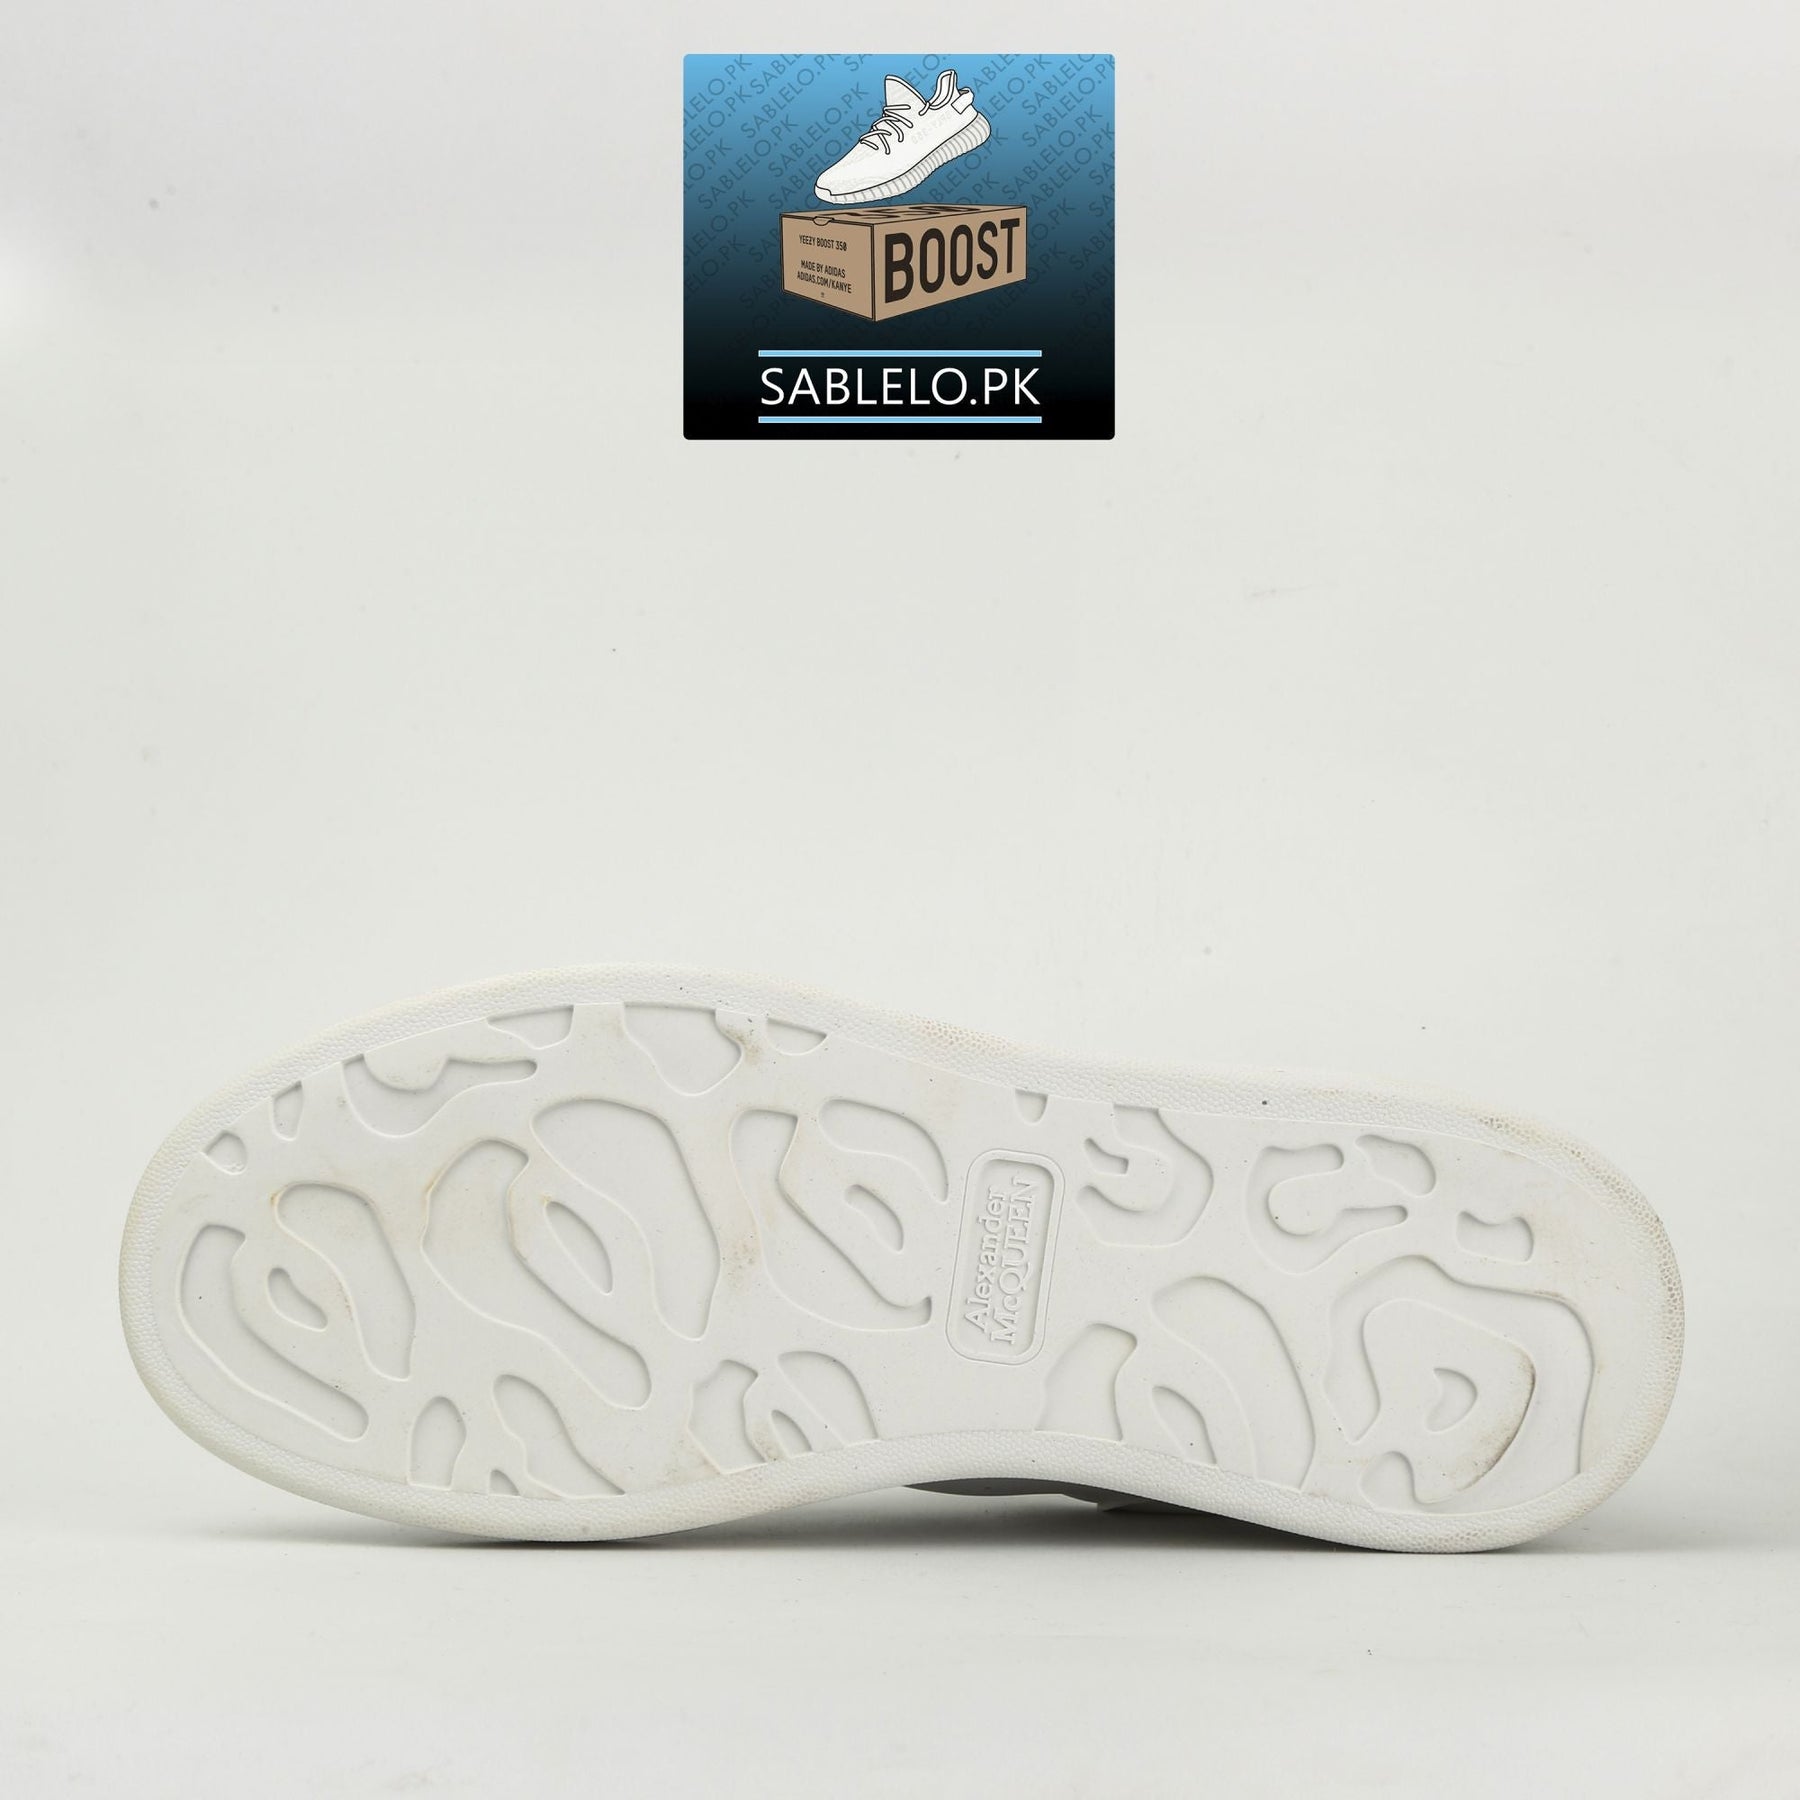 Alexander McQueen Triple White - Premium Shoes from Sablelo.pk - Just Rs.3999! Shop now at Sablelo.pk